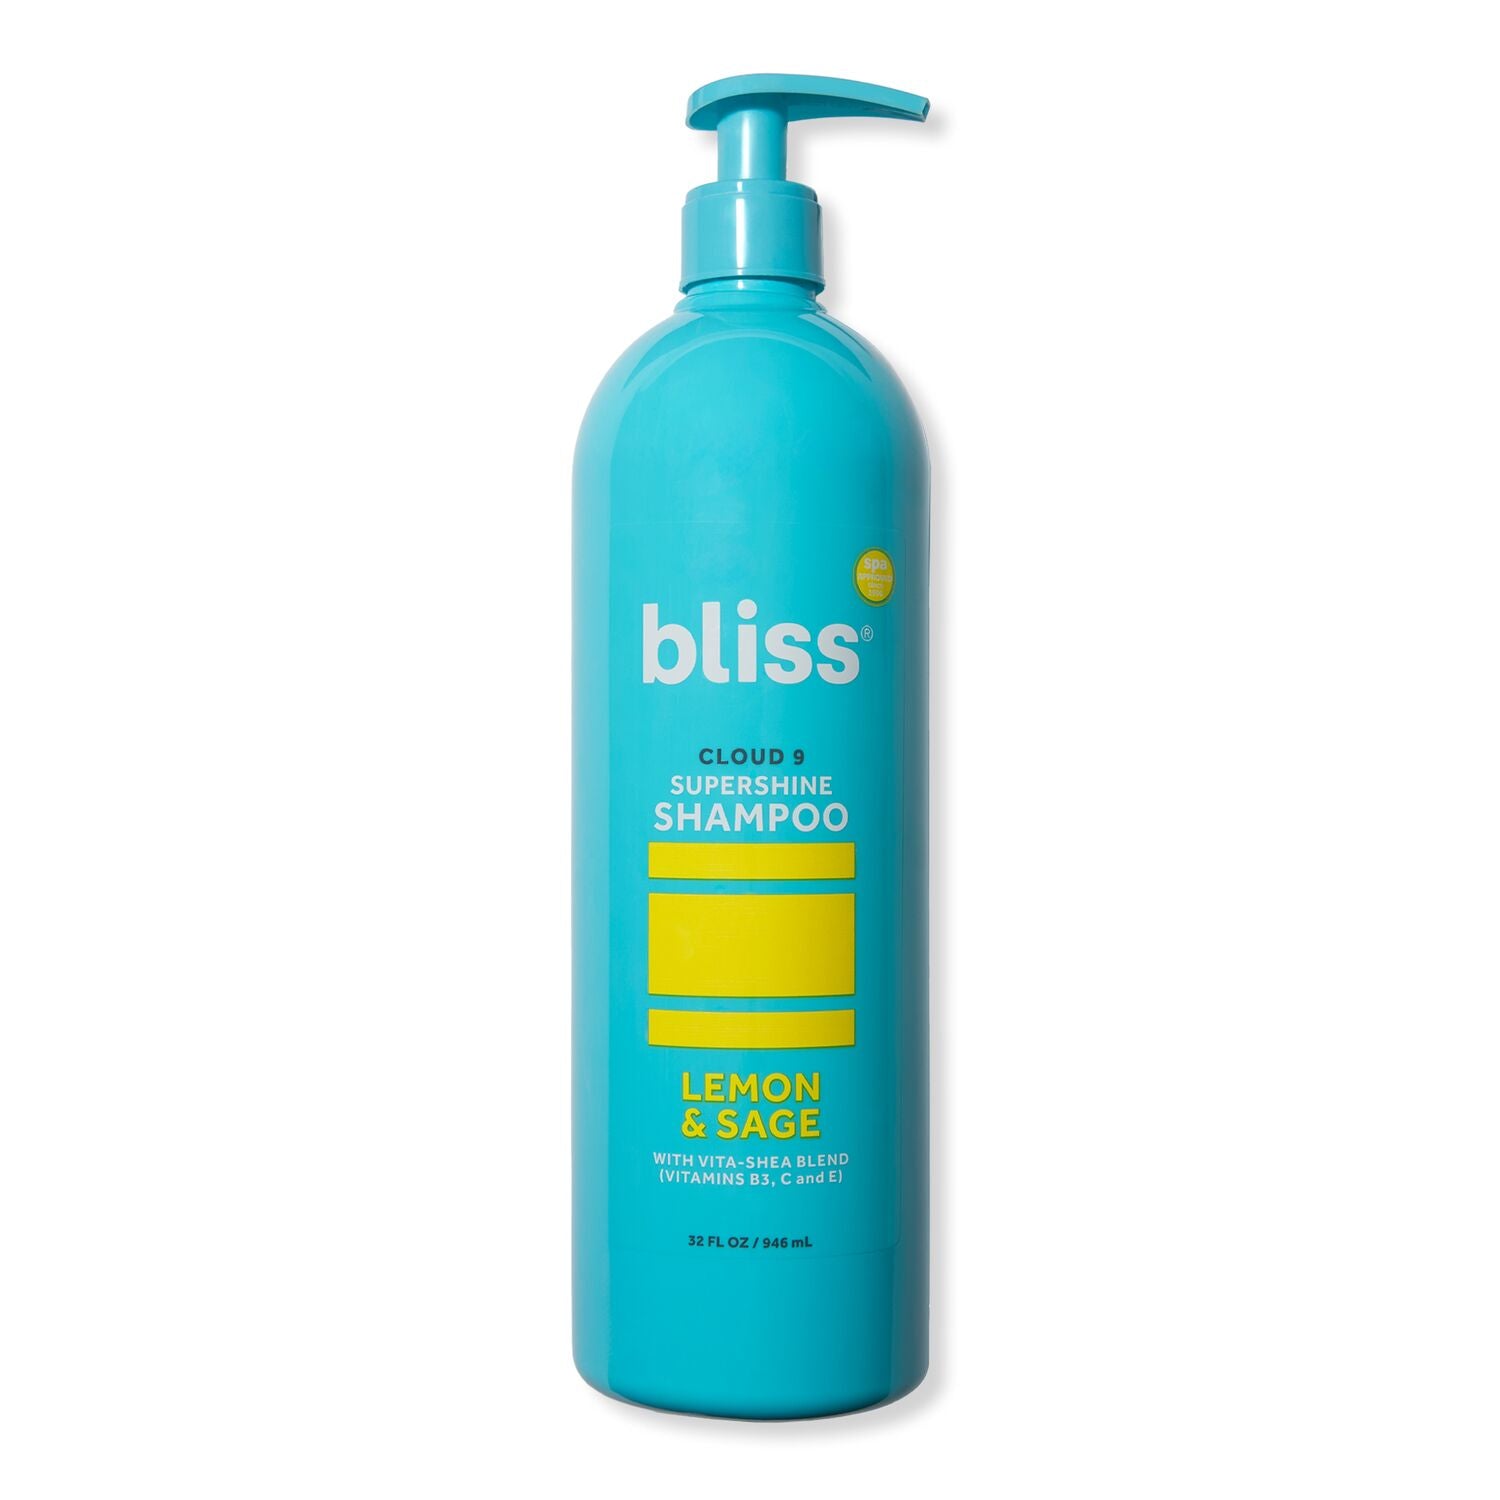 Bliss World Store Supershine Shampoo, Lemon & Sage With Vita-shea Blend (vitamins B3, C And E)